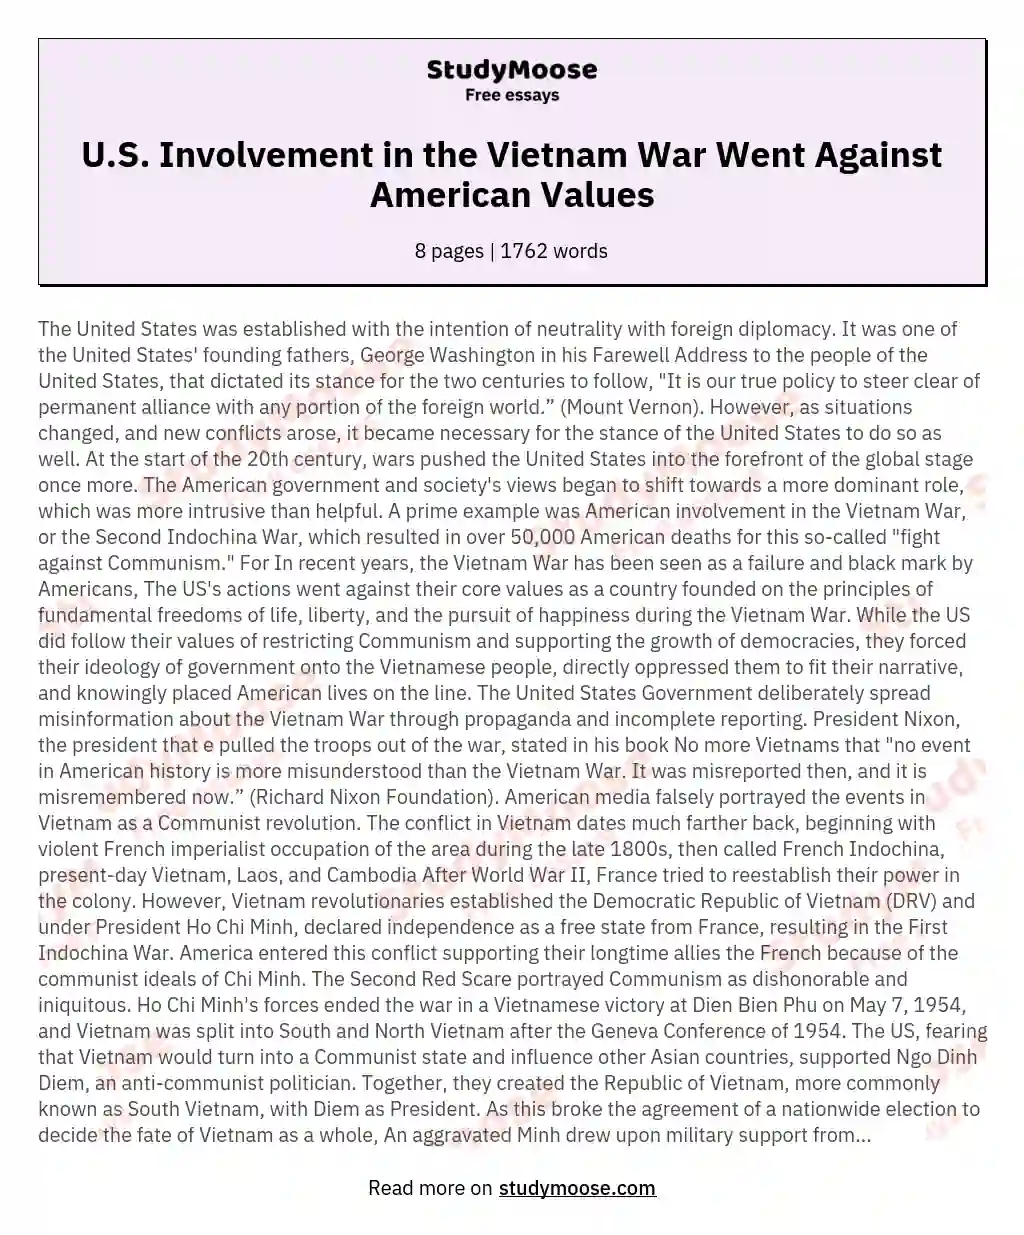 U.S. Involvement in the Vietnam War Went Against American Values essay